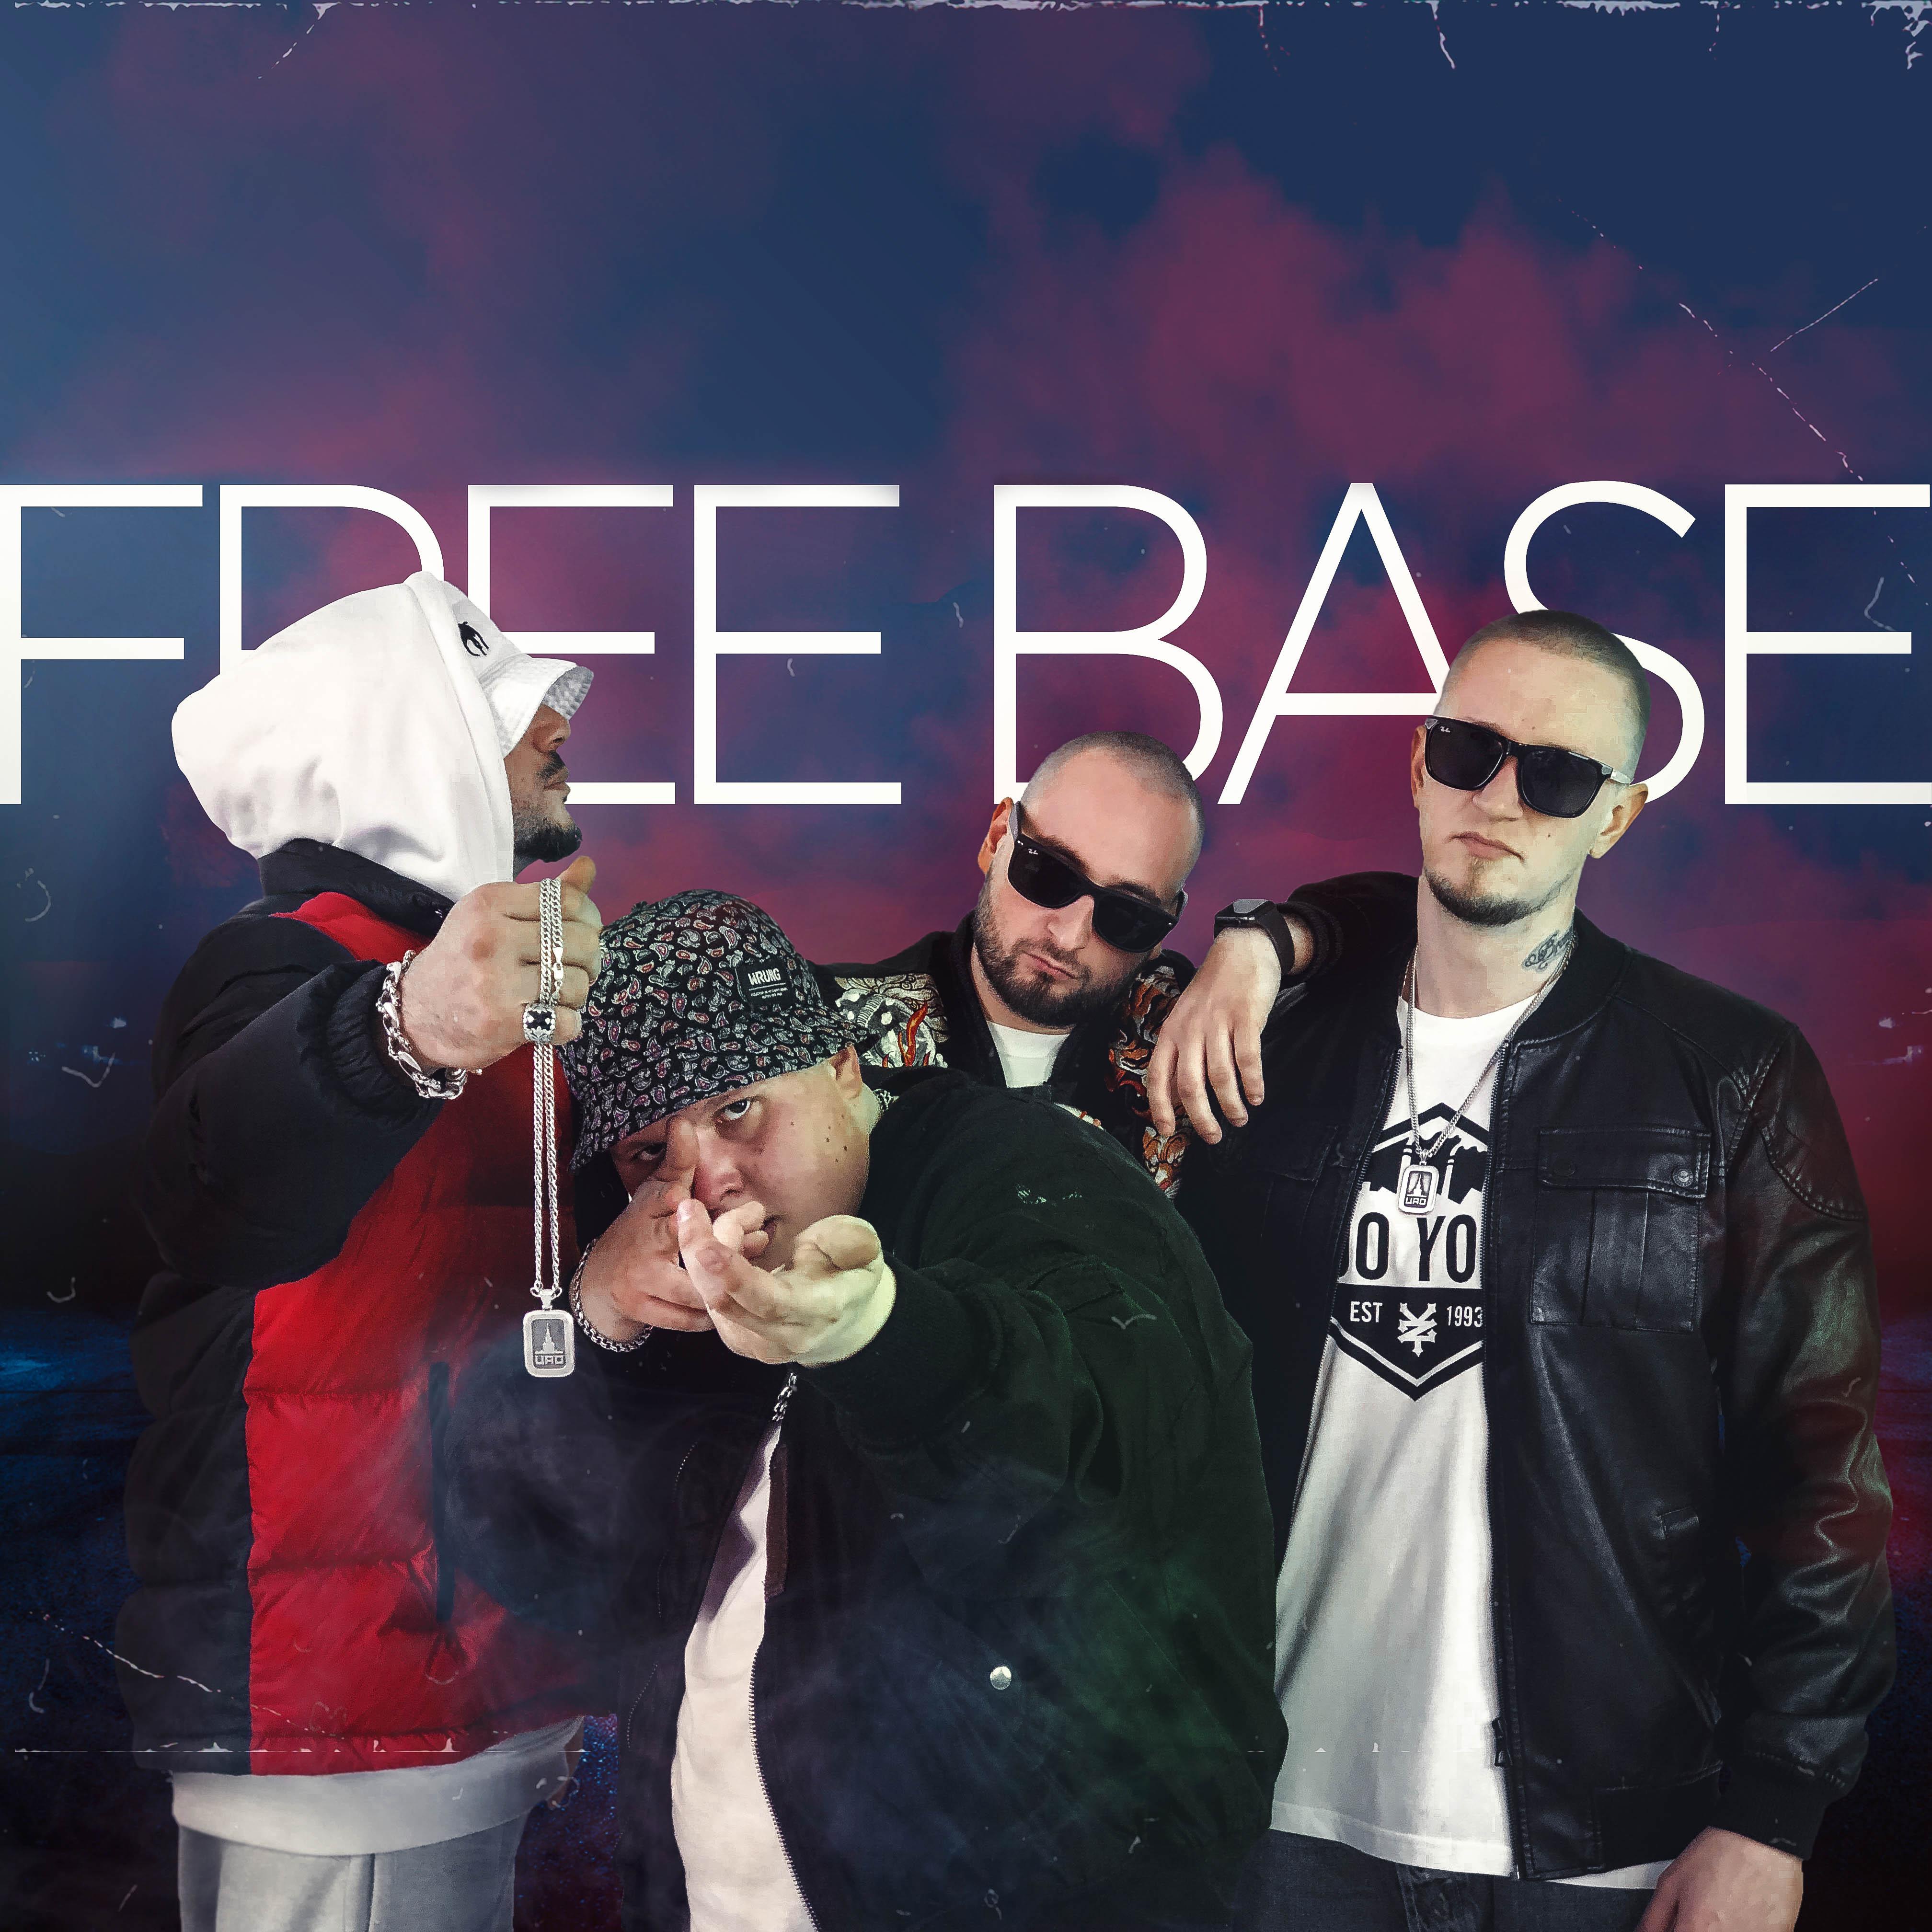 FREE BASE